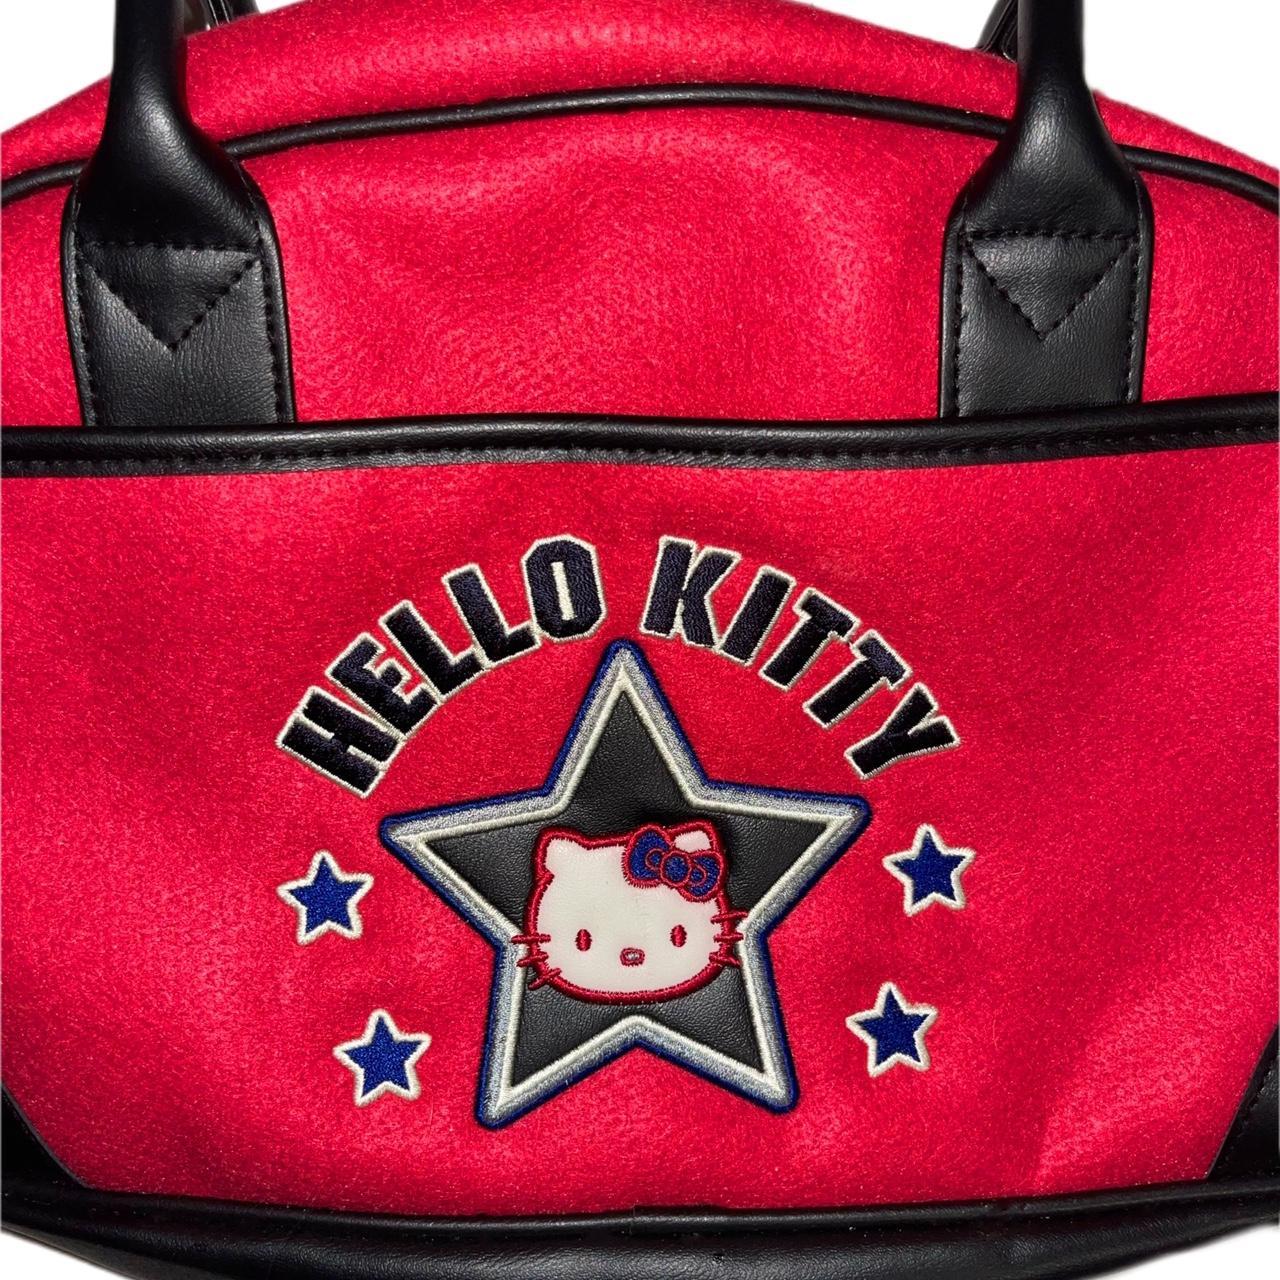 Kitty Kitty by New Vintage Handbags